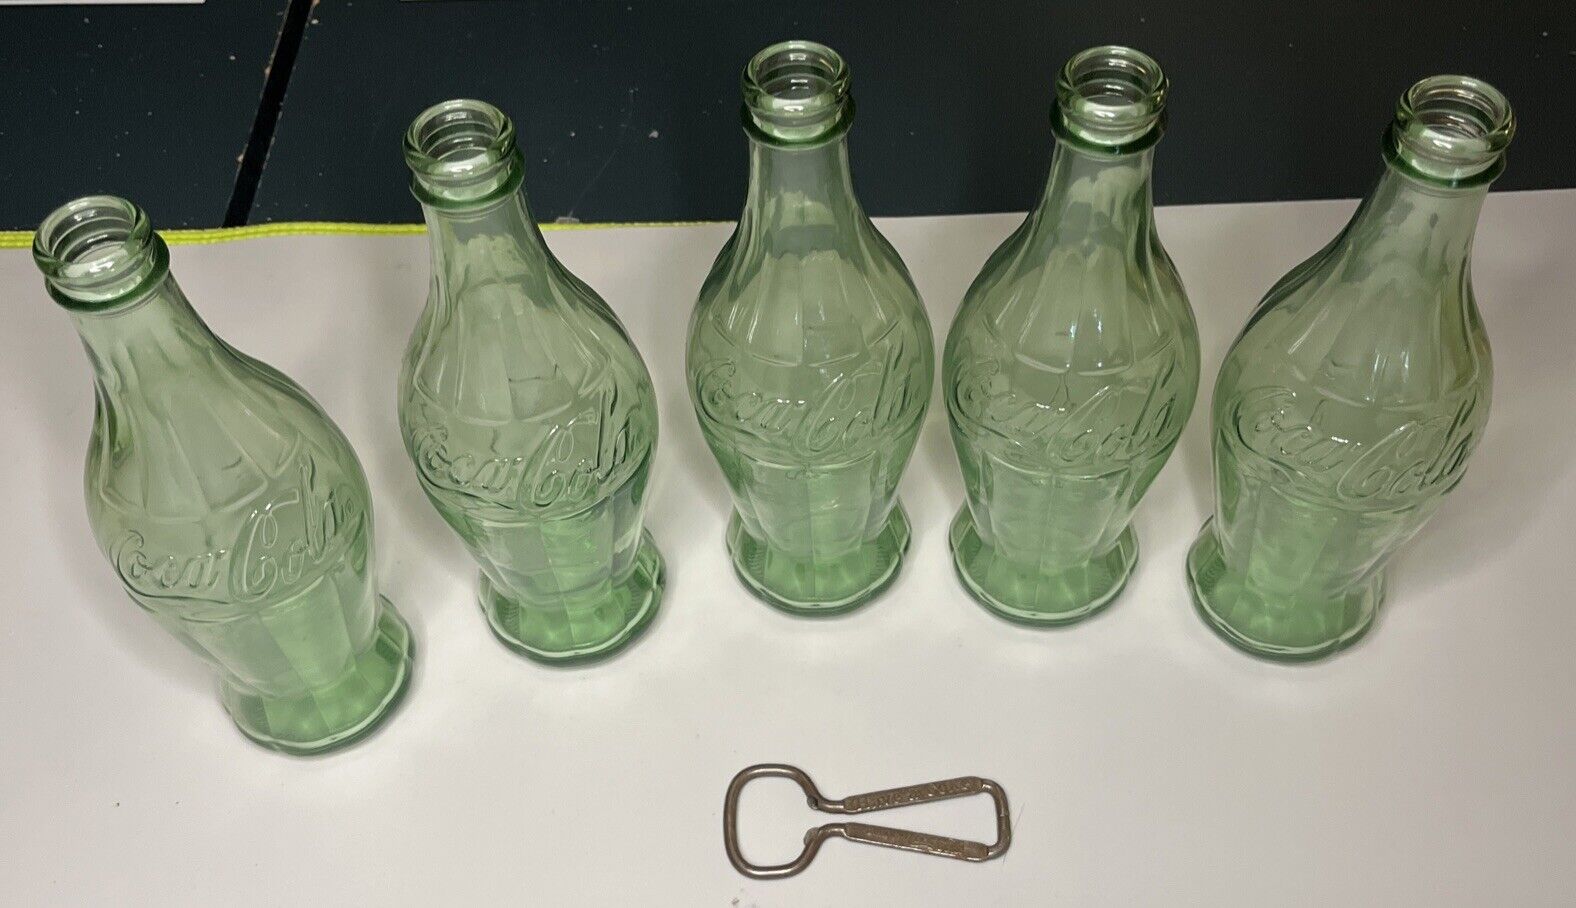 5 - 125 YEARS OPEN HAPPINESS  Coca Cola Bottles w/ Vintage Bottle Opener